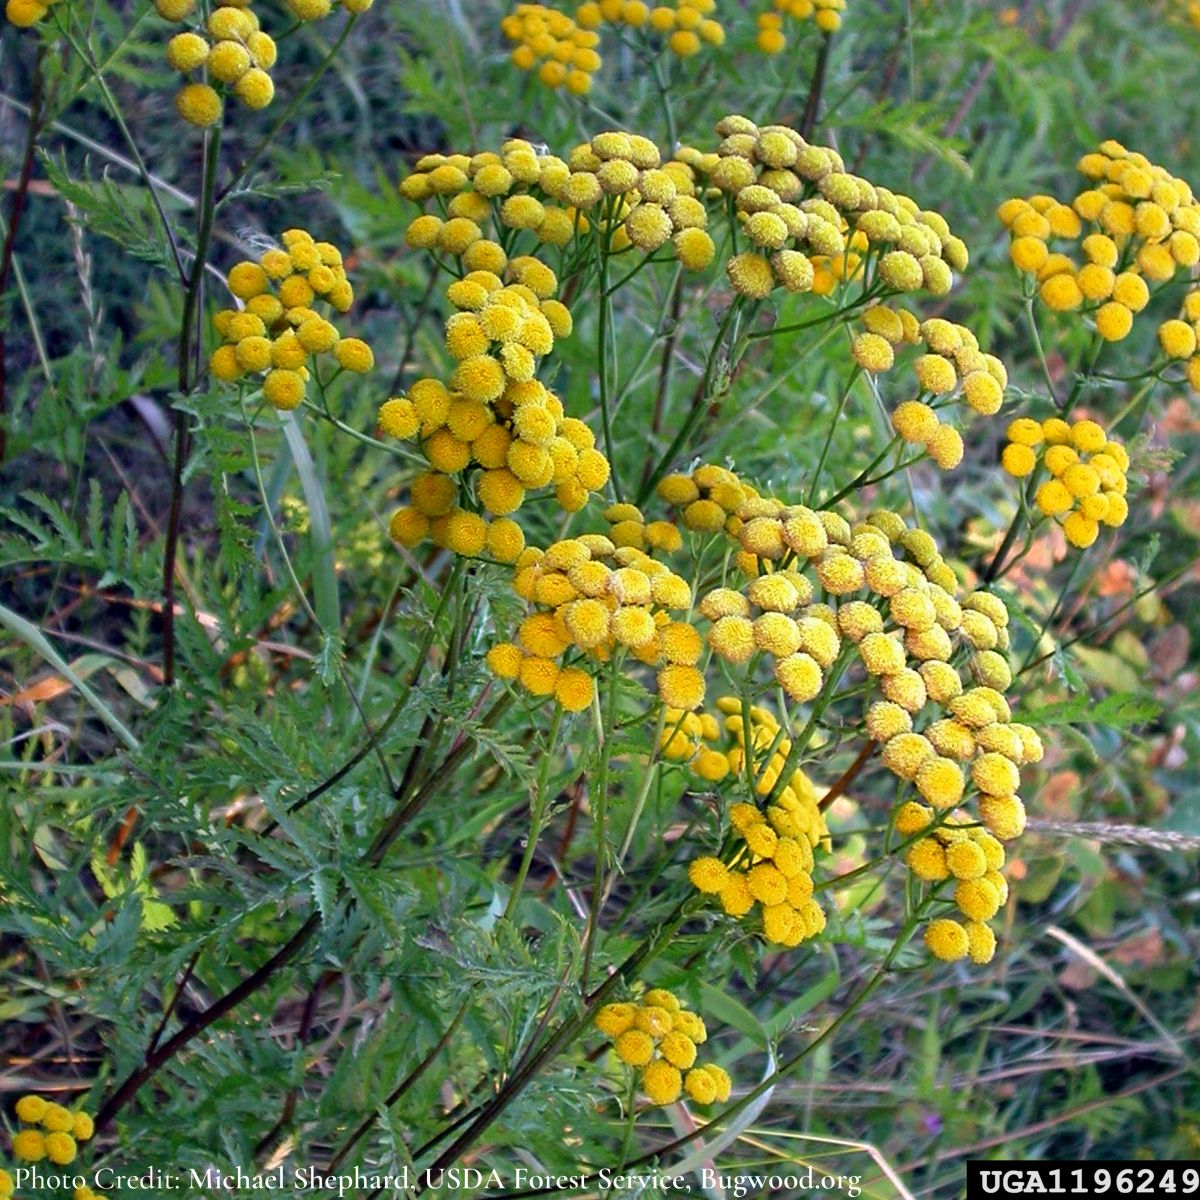 Photo Credit: Michael Shephard, USDA Forest Service, Bugwood.org
Common Tansy, Tanacetum vulgare L., invasive plant